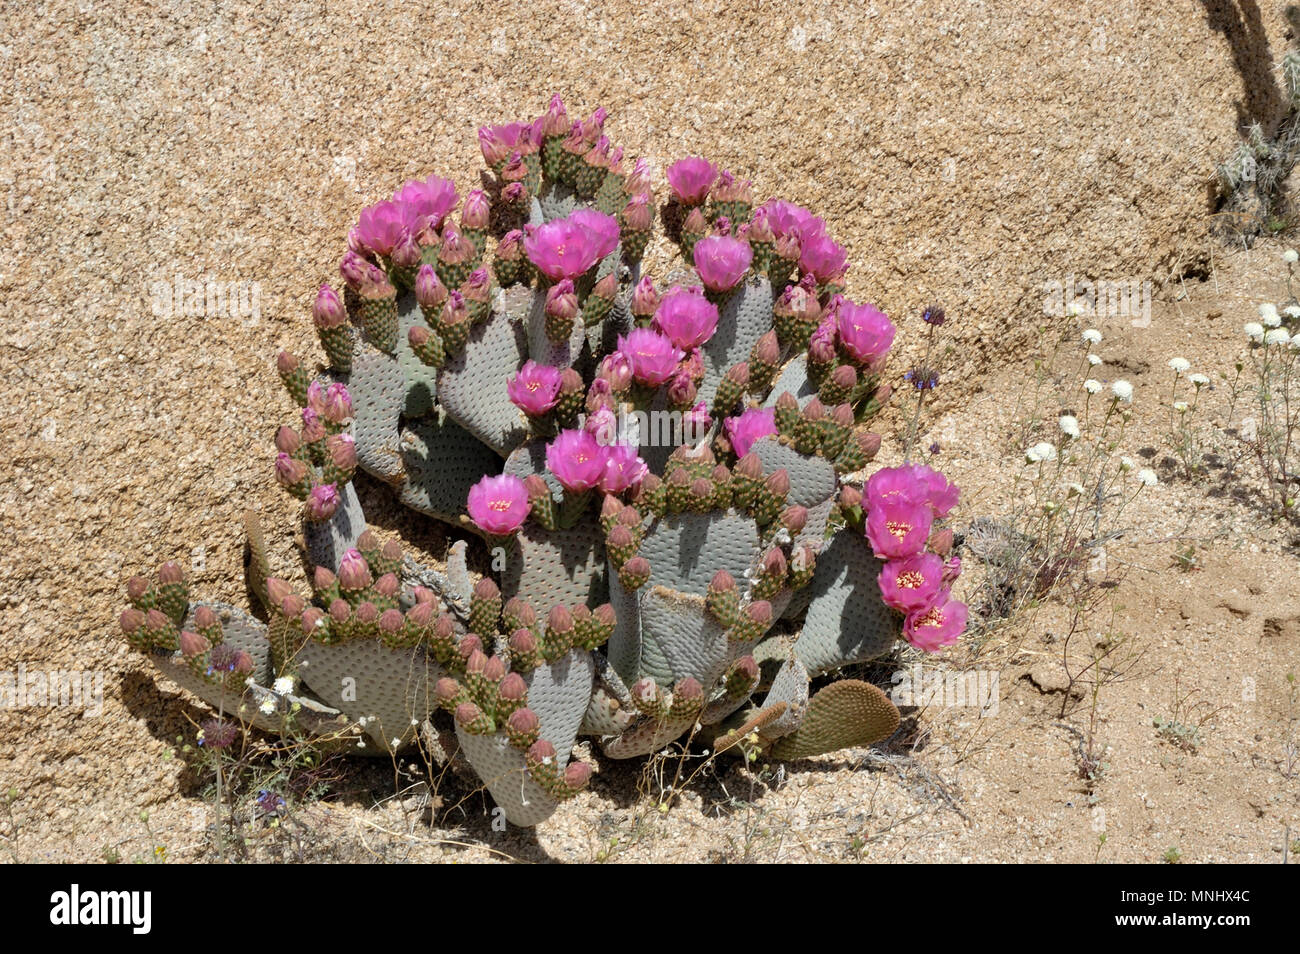 Beavertail cactus, beavertail pricklypear, Opuntia basilaris, cactus in bloom, pink flowers, Wild Flowers, Geology Tour Road, Joshua Tree  040410 0694 Stock Photo